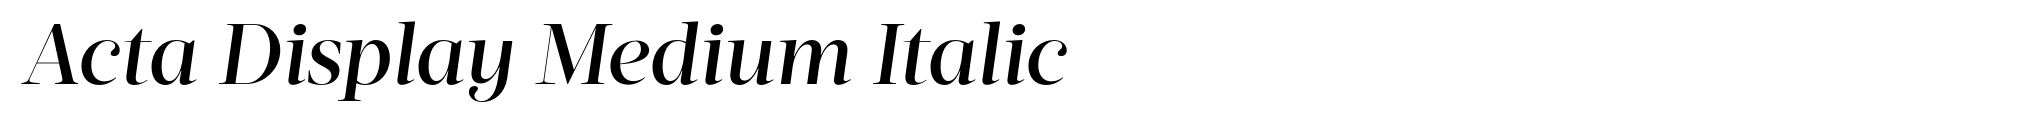 Acta Display Medium Italic image